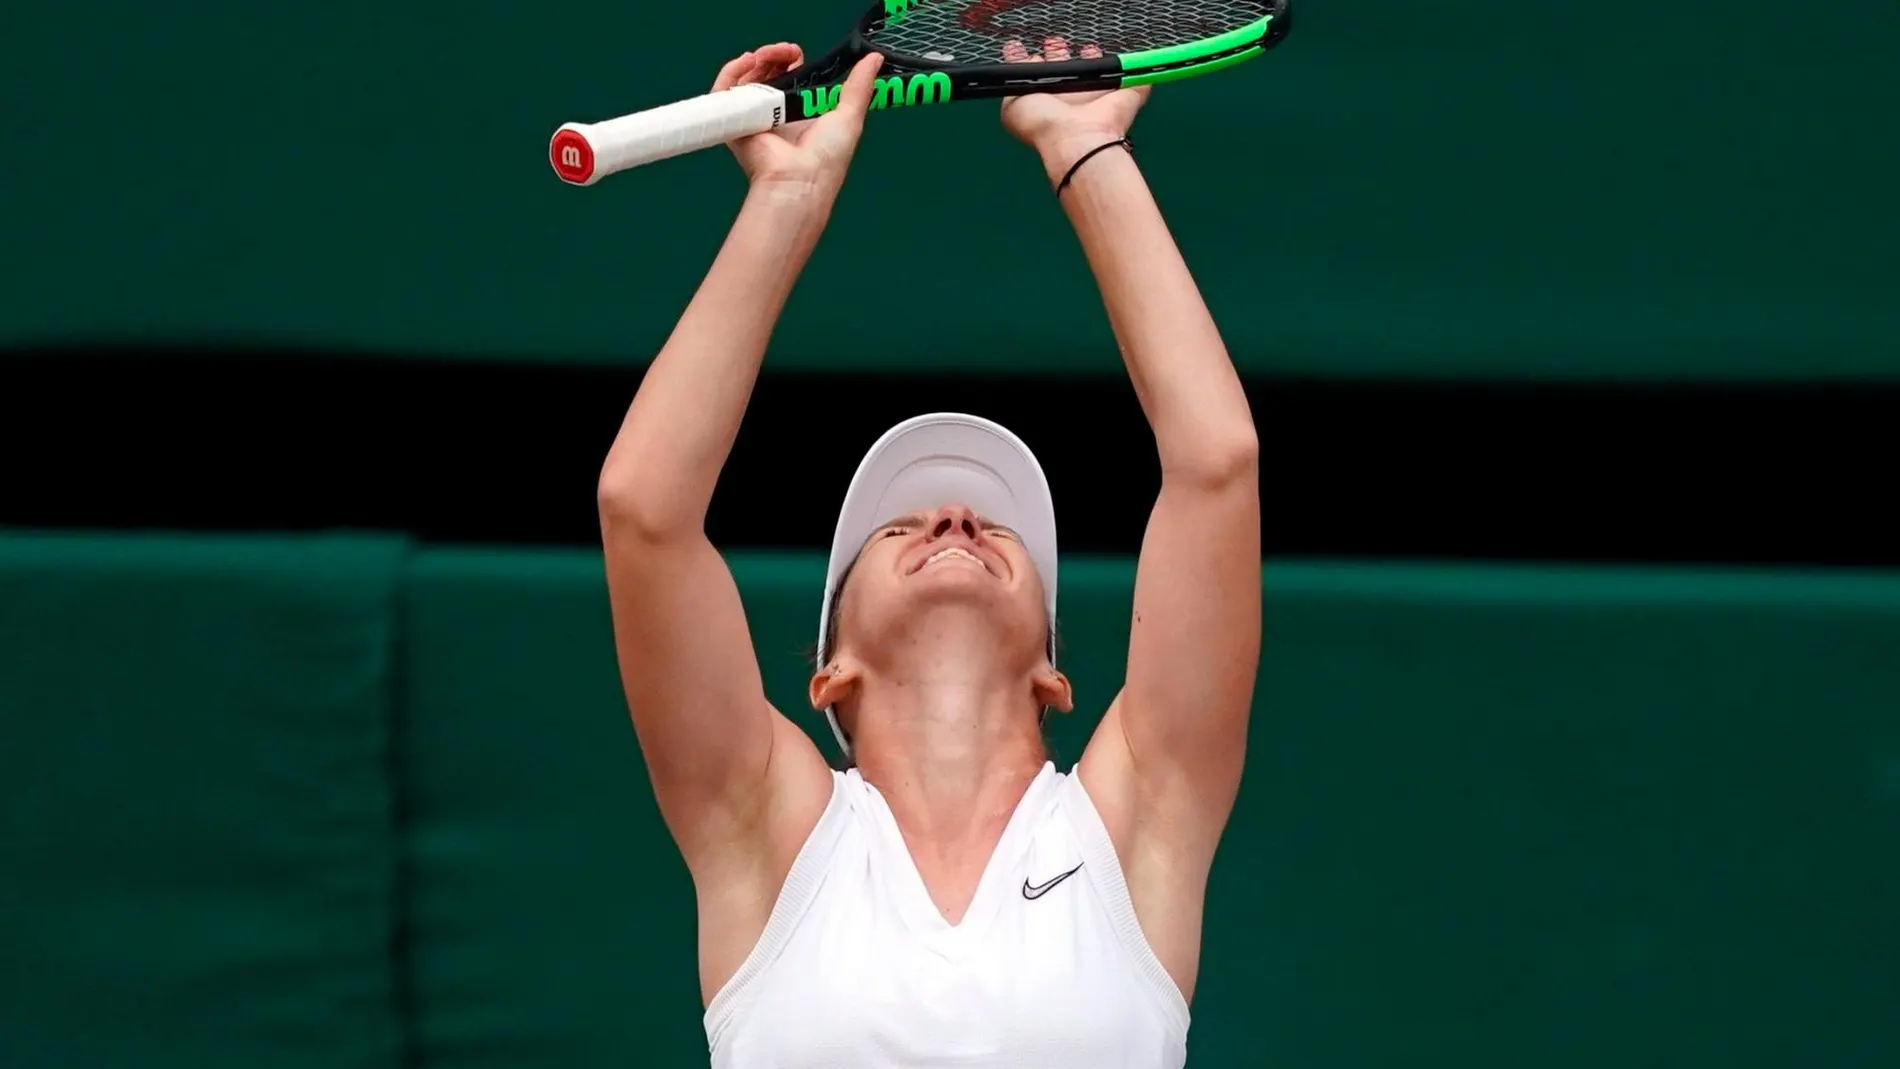 La rumana Simona Halep celebra su victoria ante Serena Williams en la final de Wimbledon. Efe